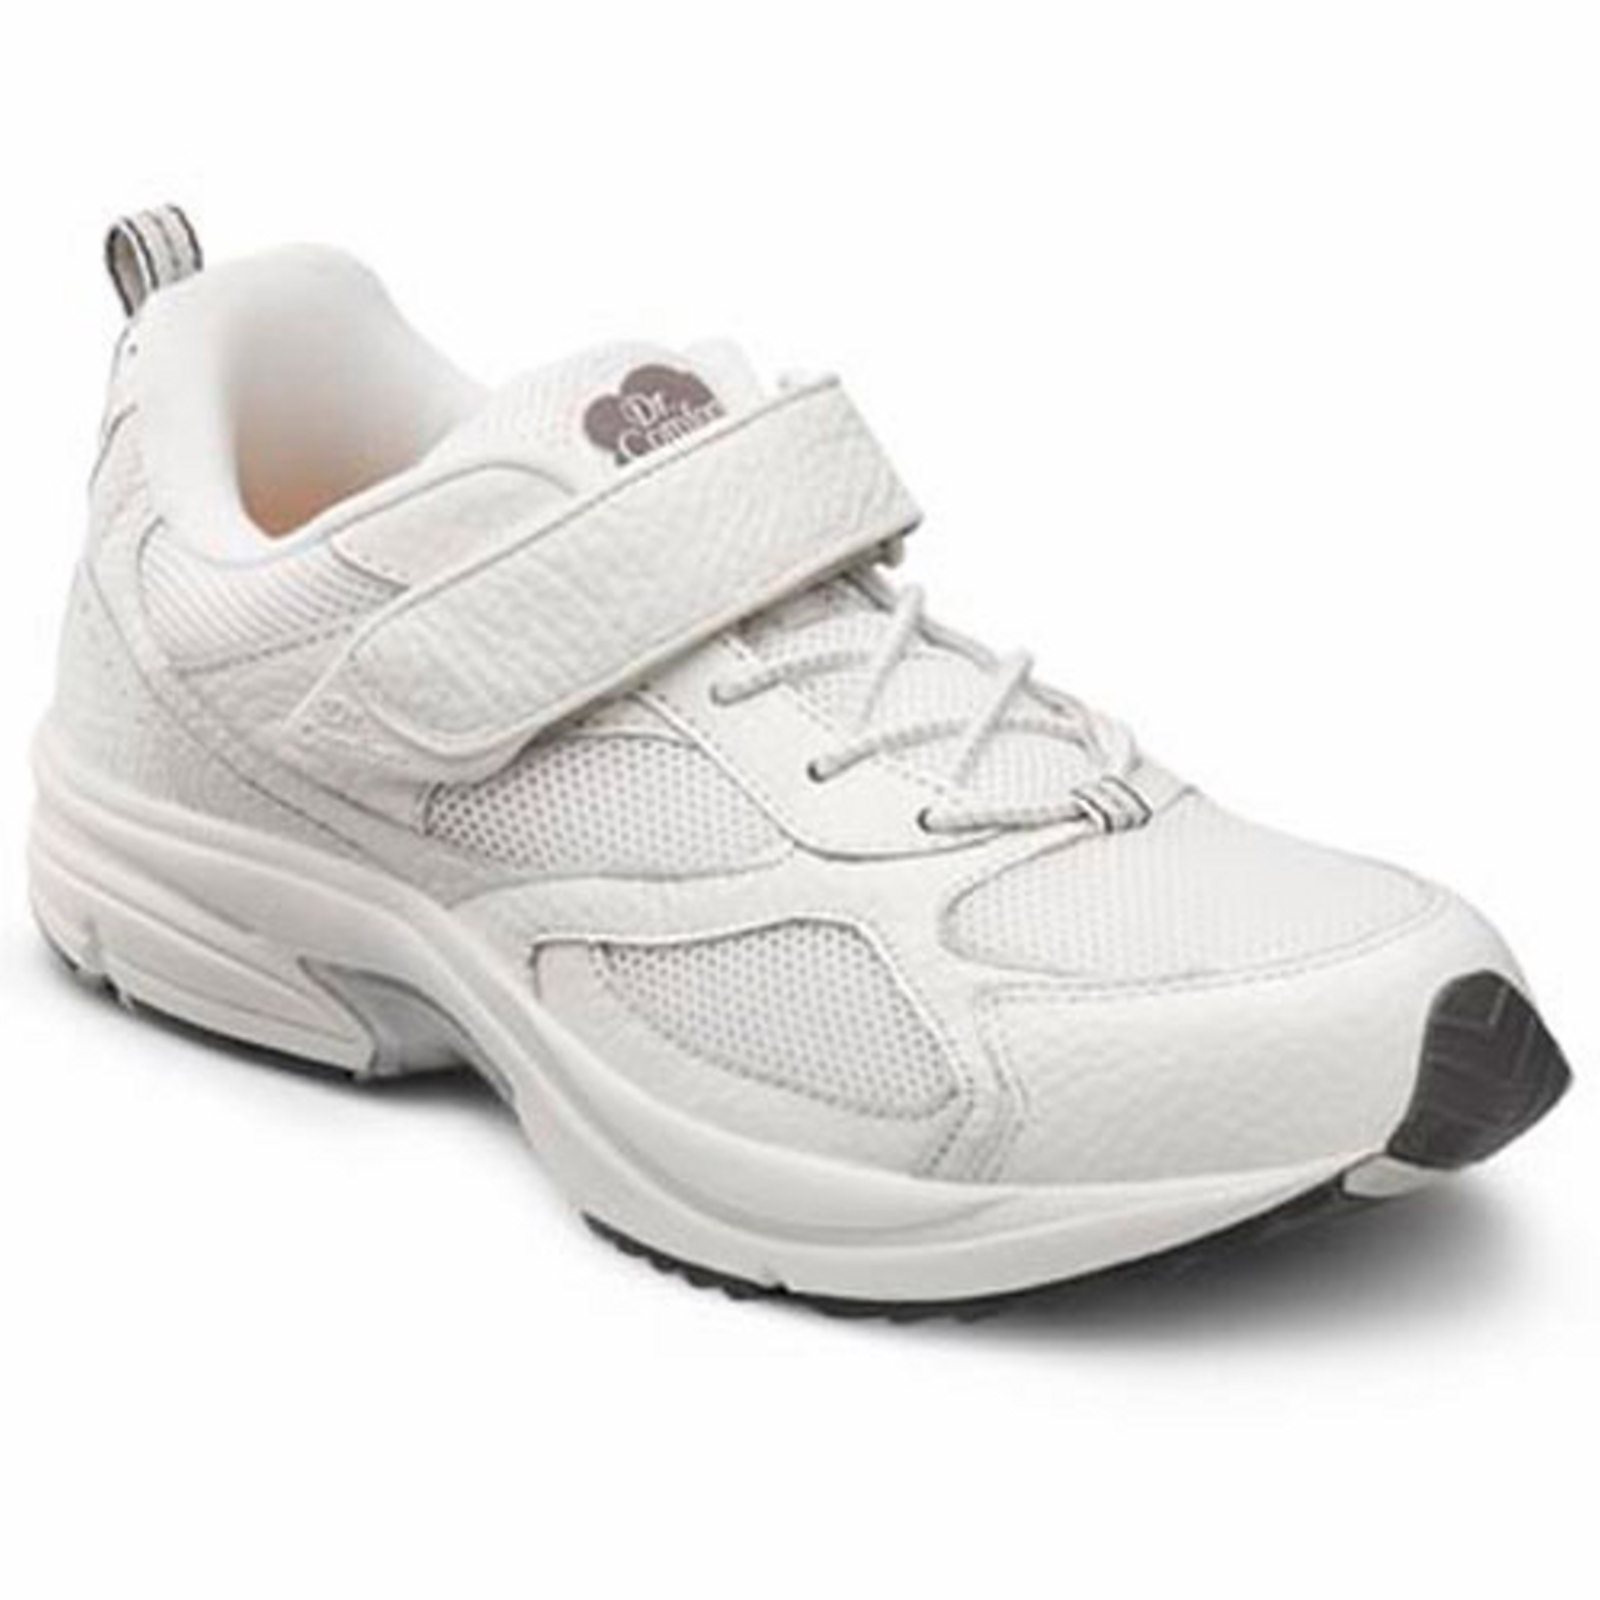 Dr. Comfort Endurance Men's Athletic Shoe: 12 Medium (B/D) White Elastic Lace w/Strap - image 1 of 4